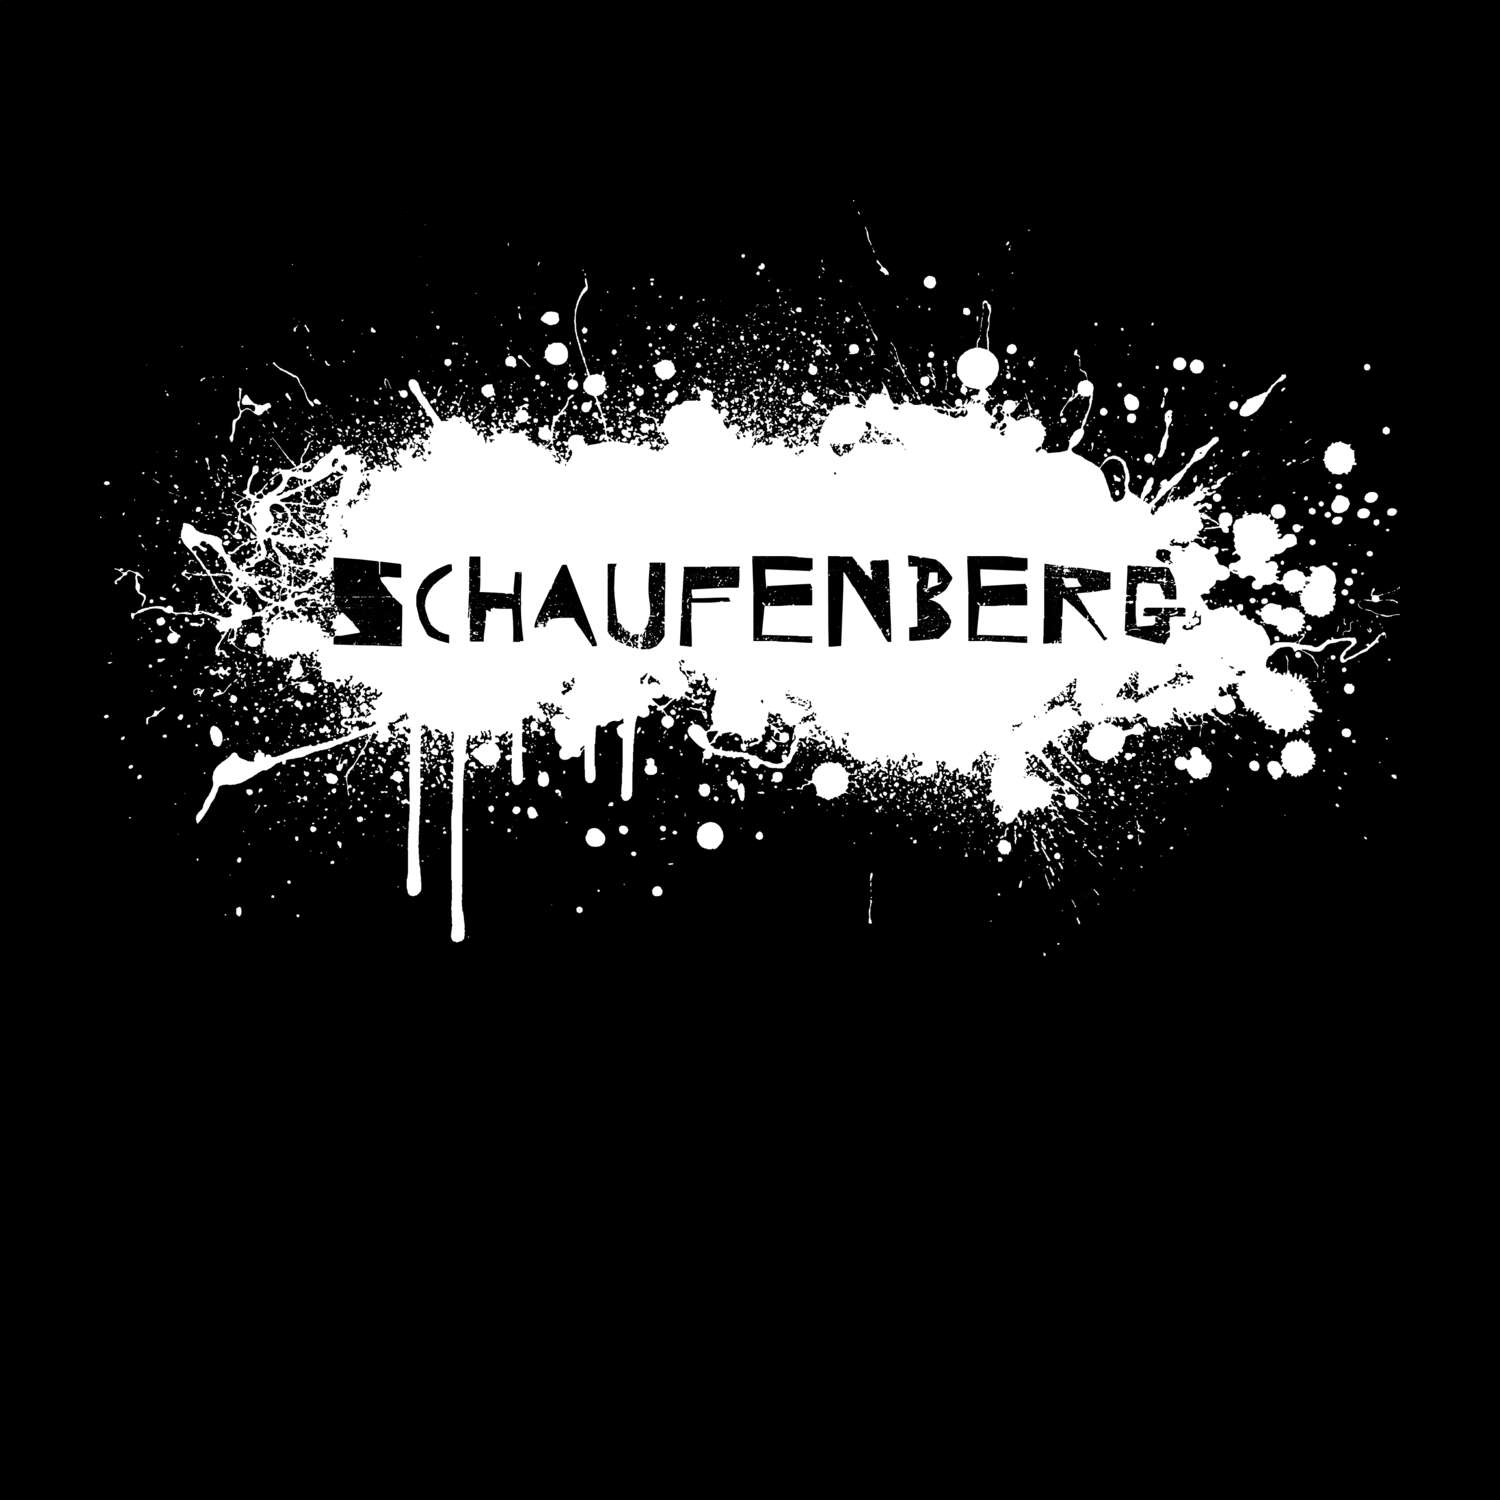 Schaufenberg T-Shirt »Paint Splash Punk«